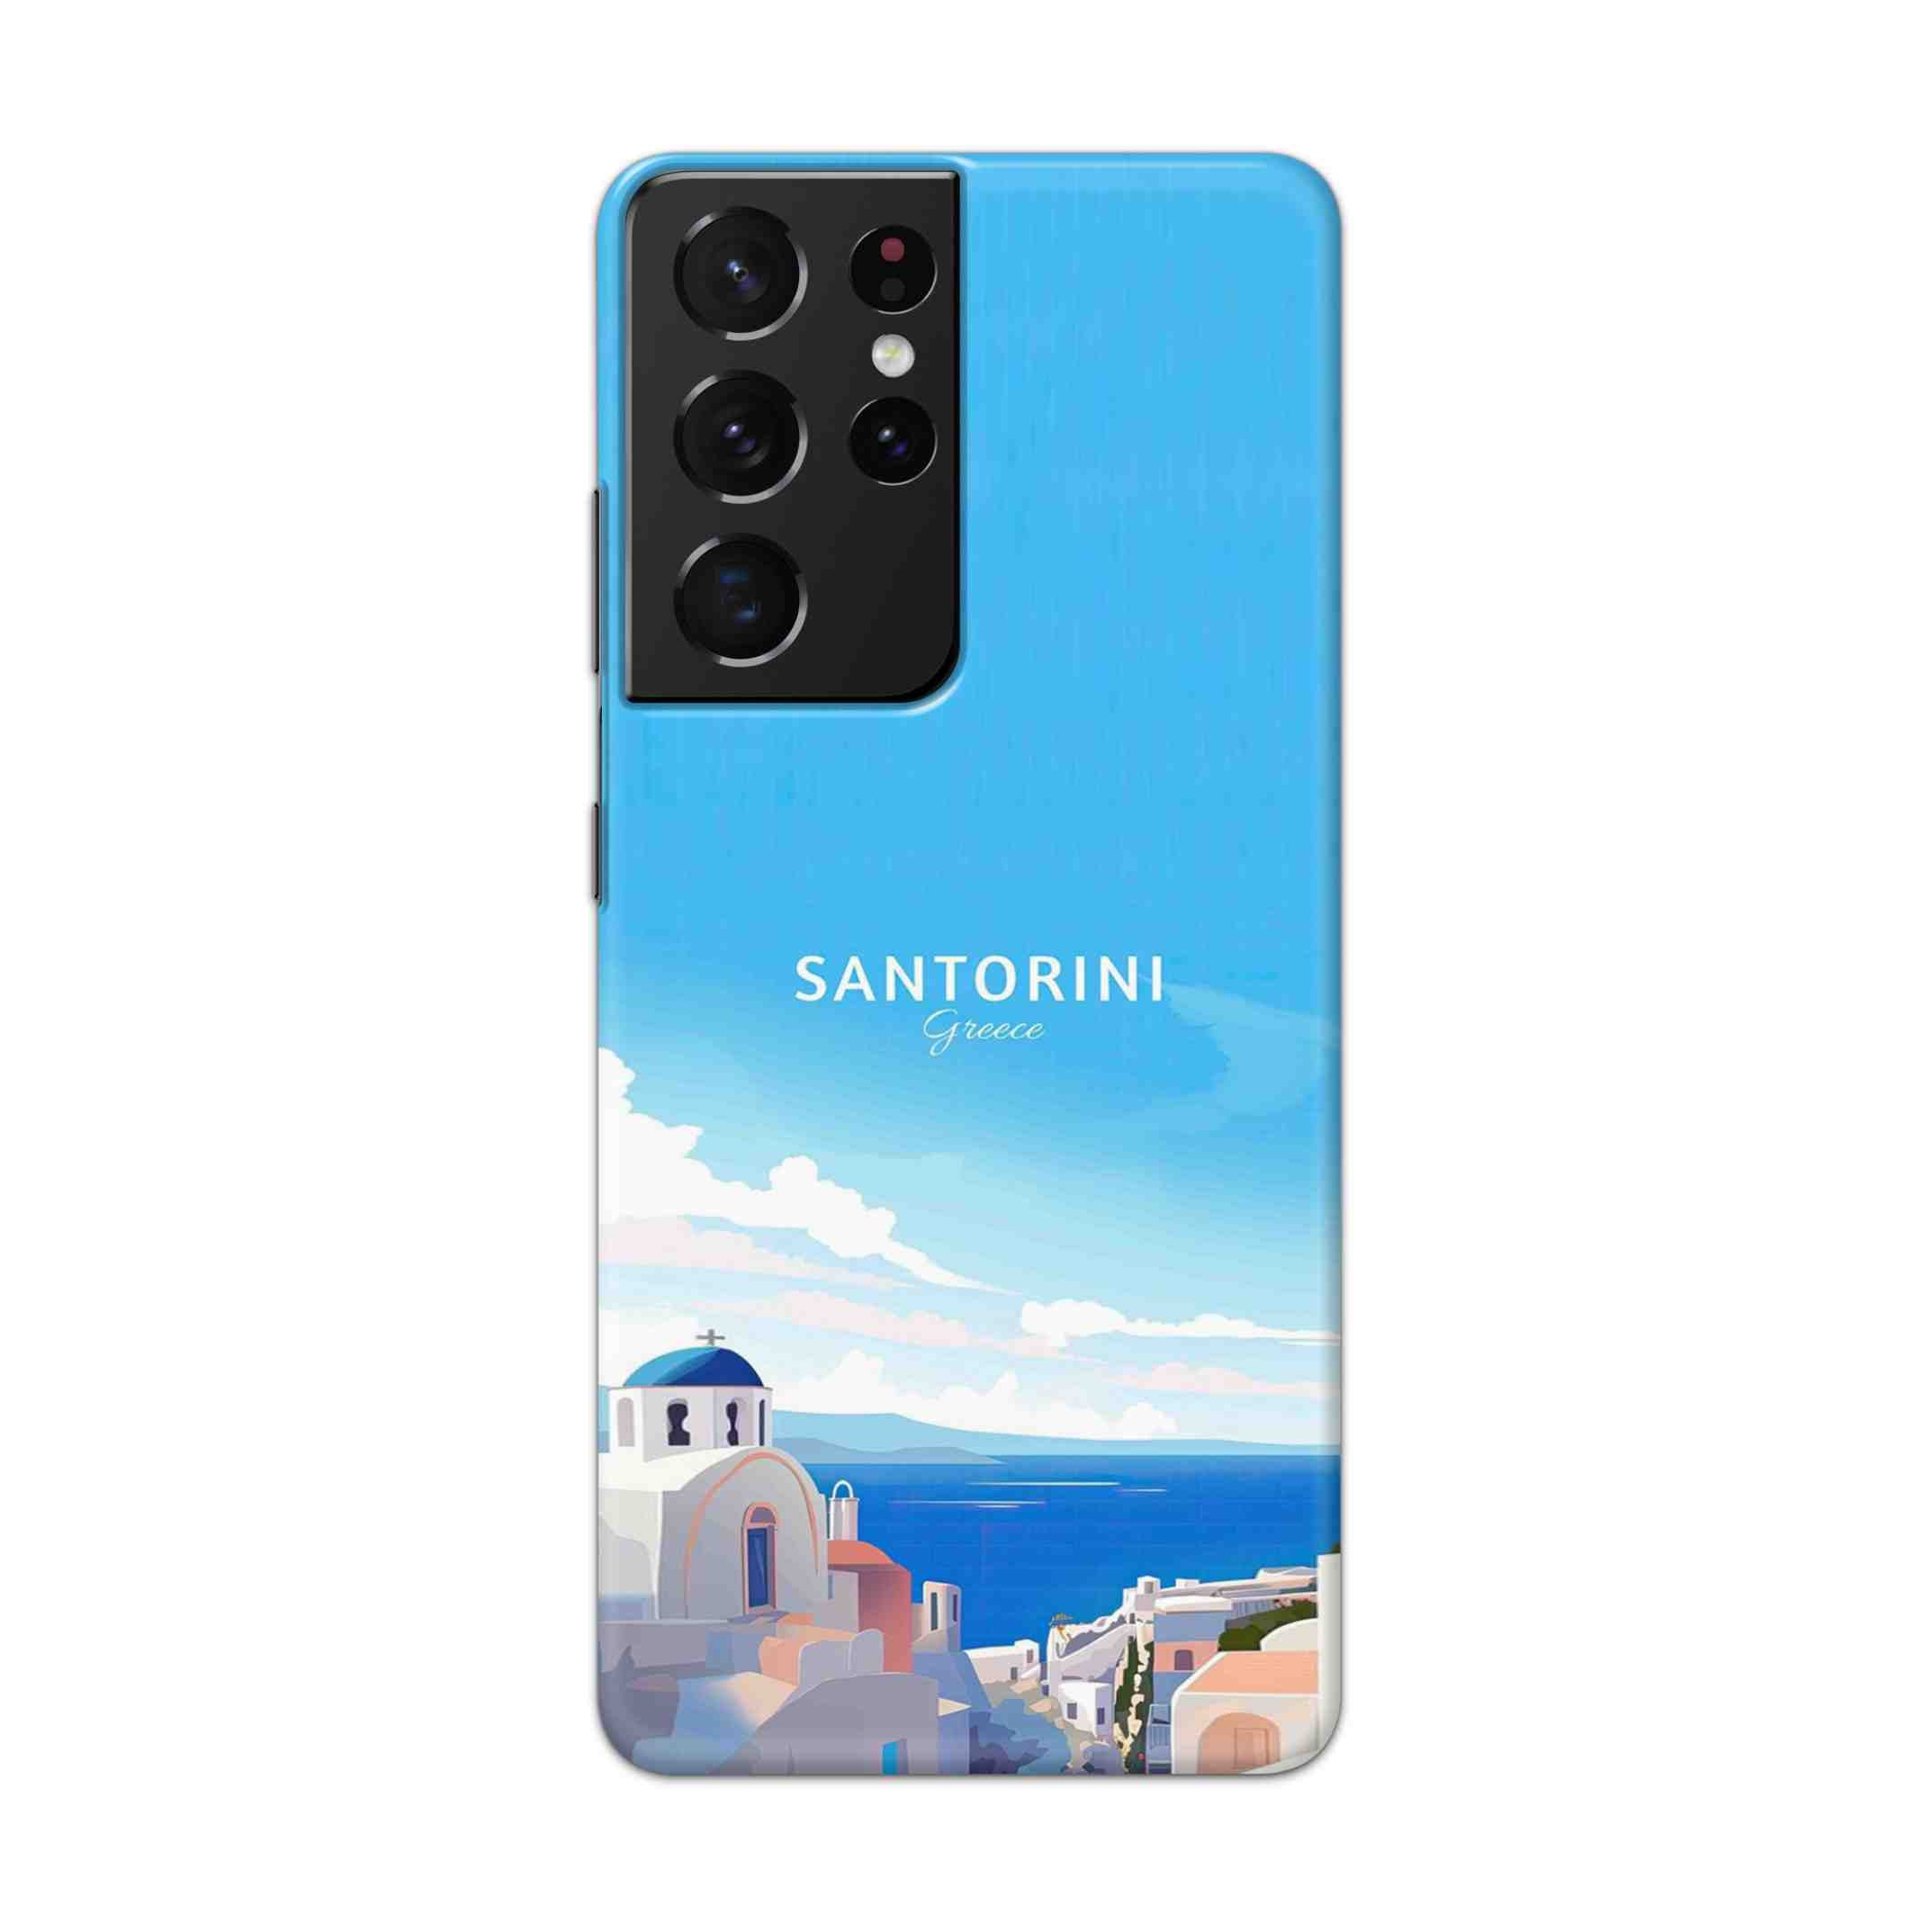 Buy Santorini Hard Back Mobile Phone Case Cover For Samsung Galaxy S21 Ultra Online